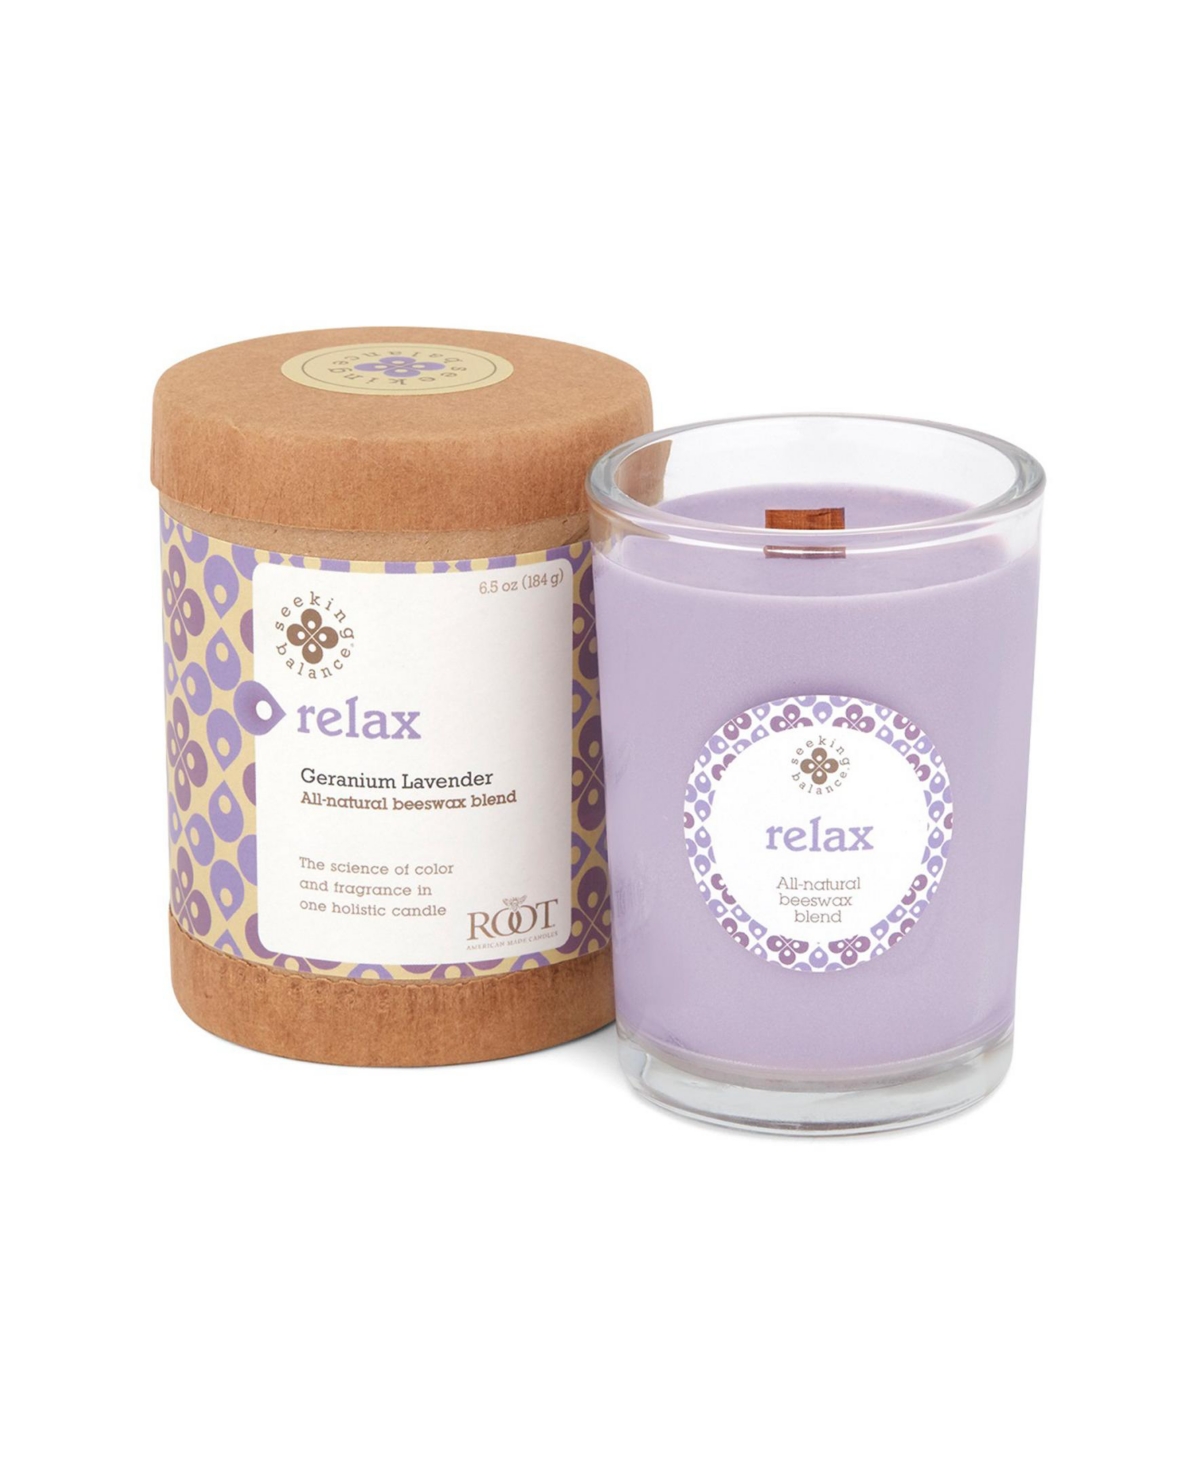 Seeking Balance Relax Geranium Lavender Spa Jar Candle, 6.5 oz - Lavender